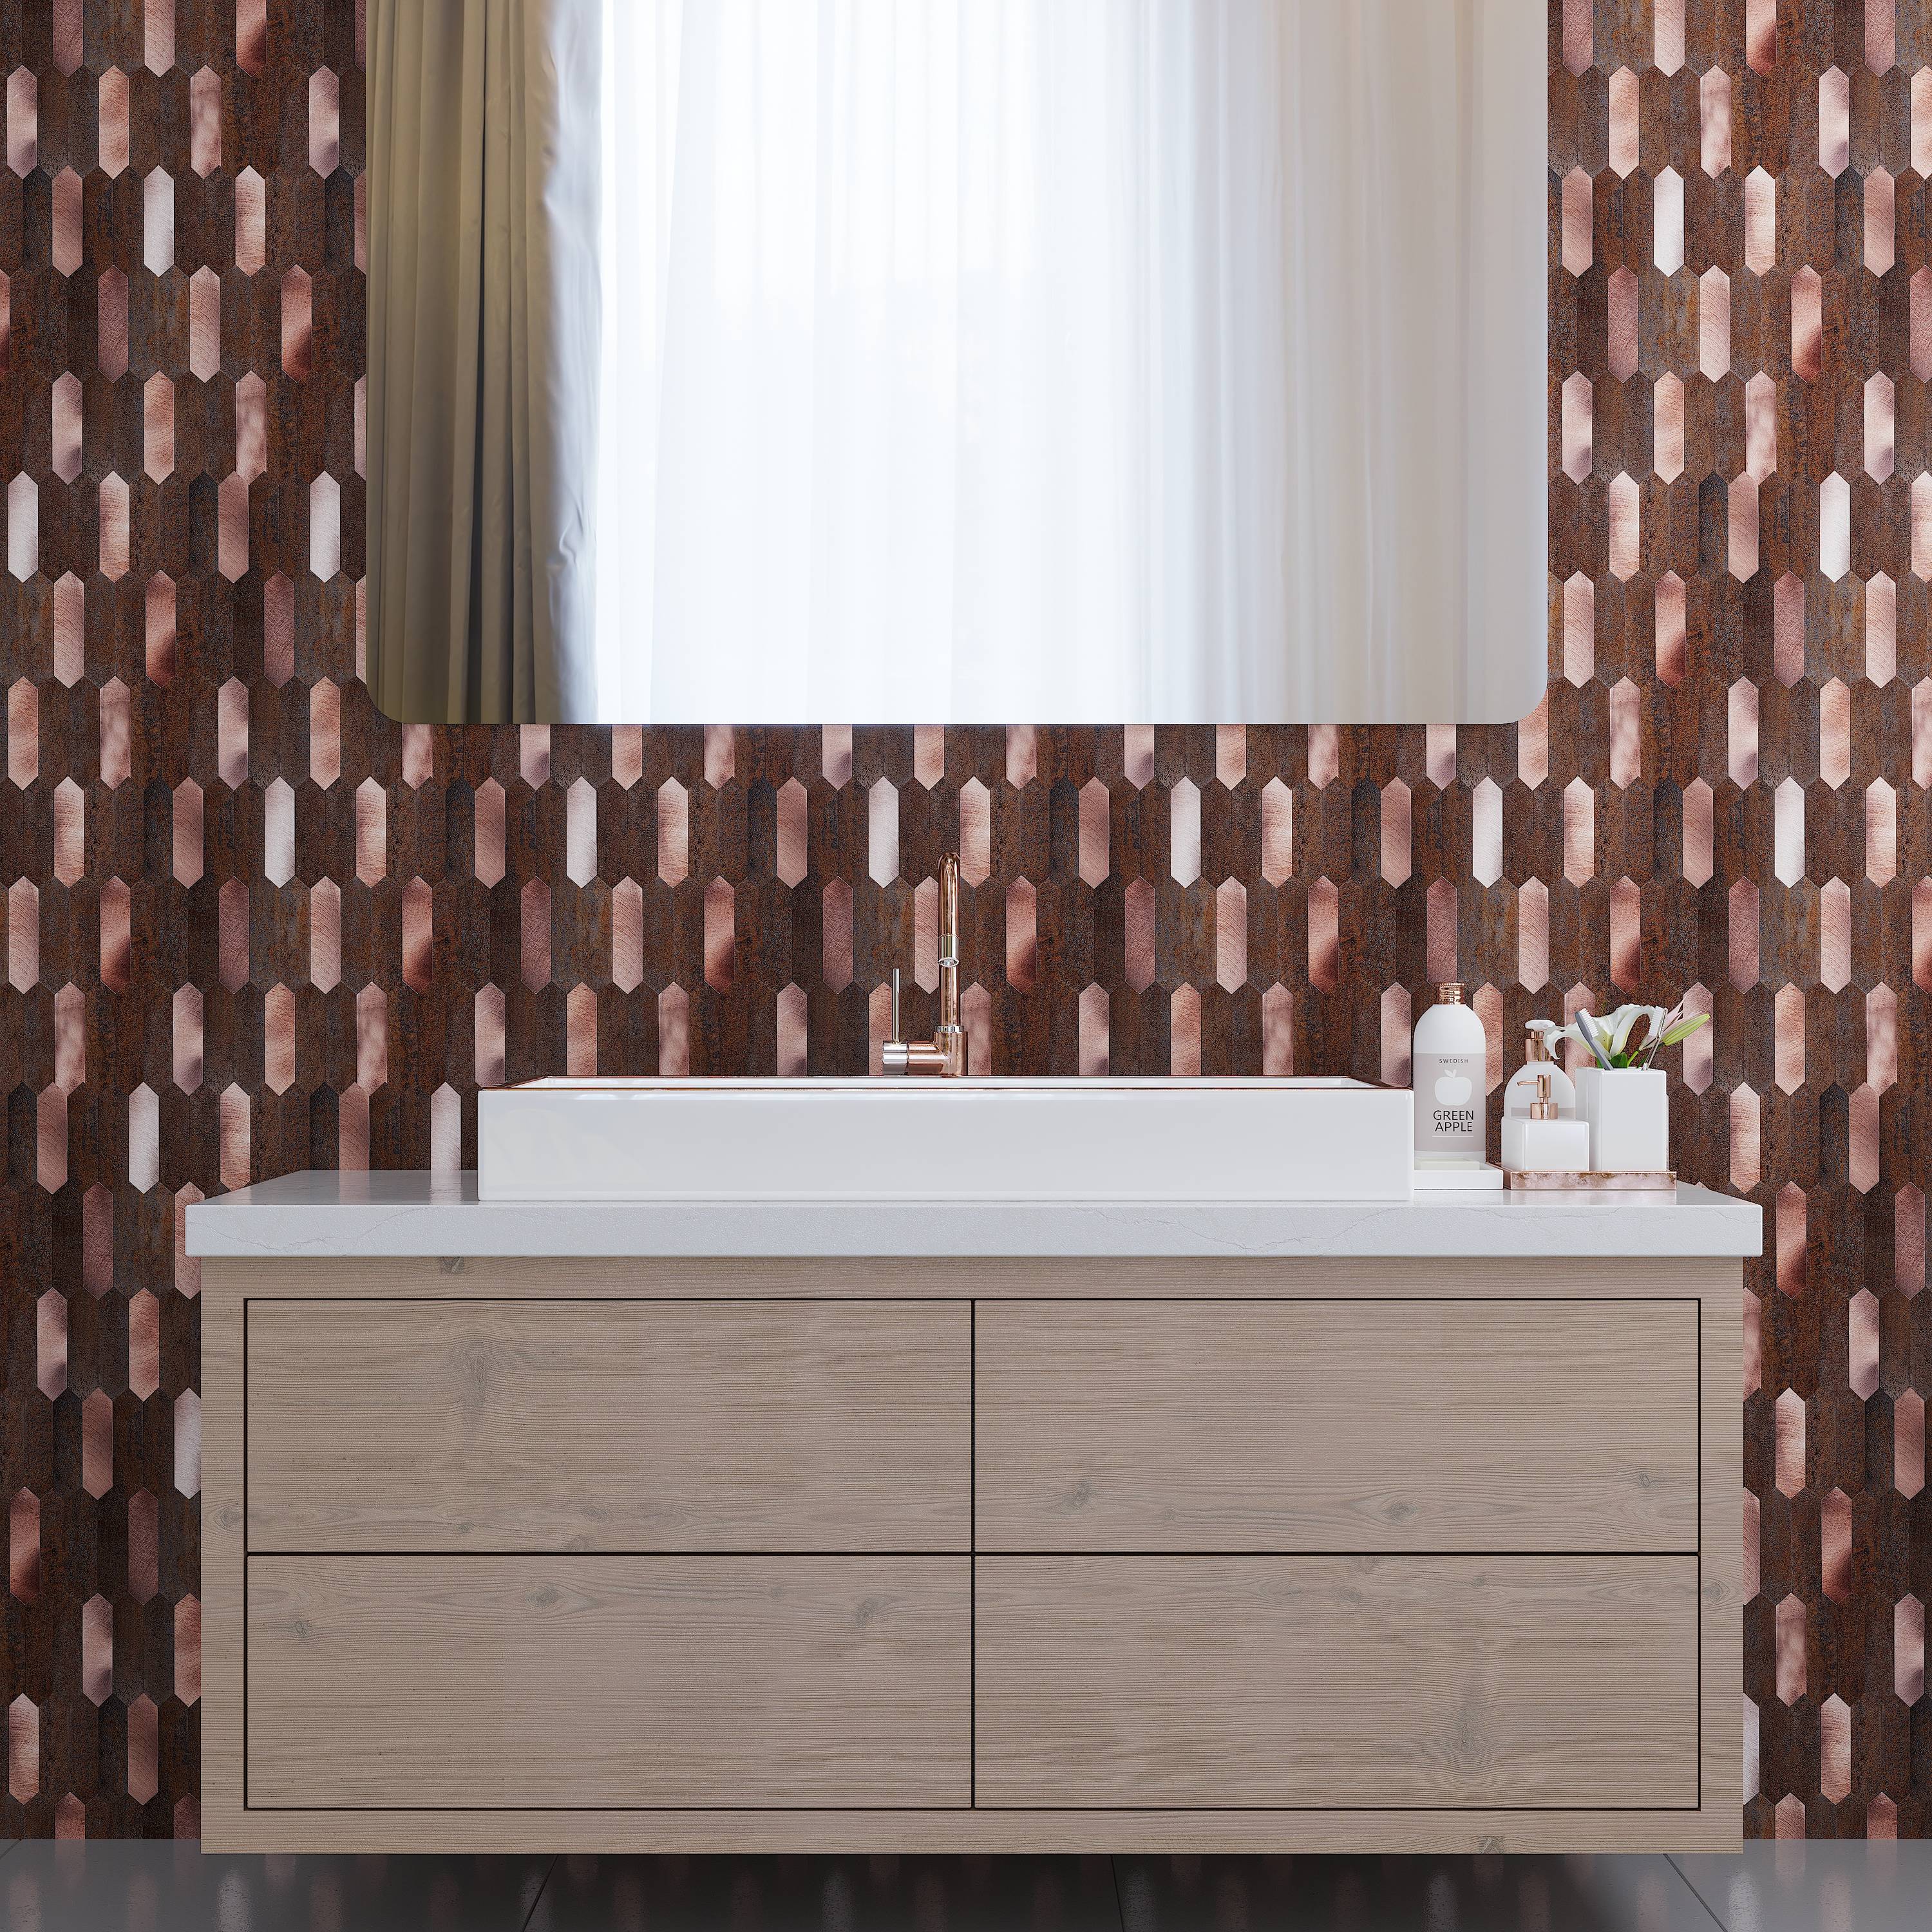 LELINTA 6 Pack Self-adhesive Mosaic Kitchen Backsplash Tile, Peel and Stick Back  Splash Tile for Kitchen and Bathroom 